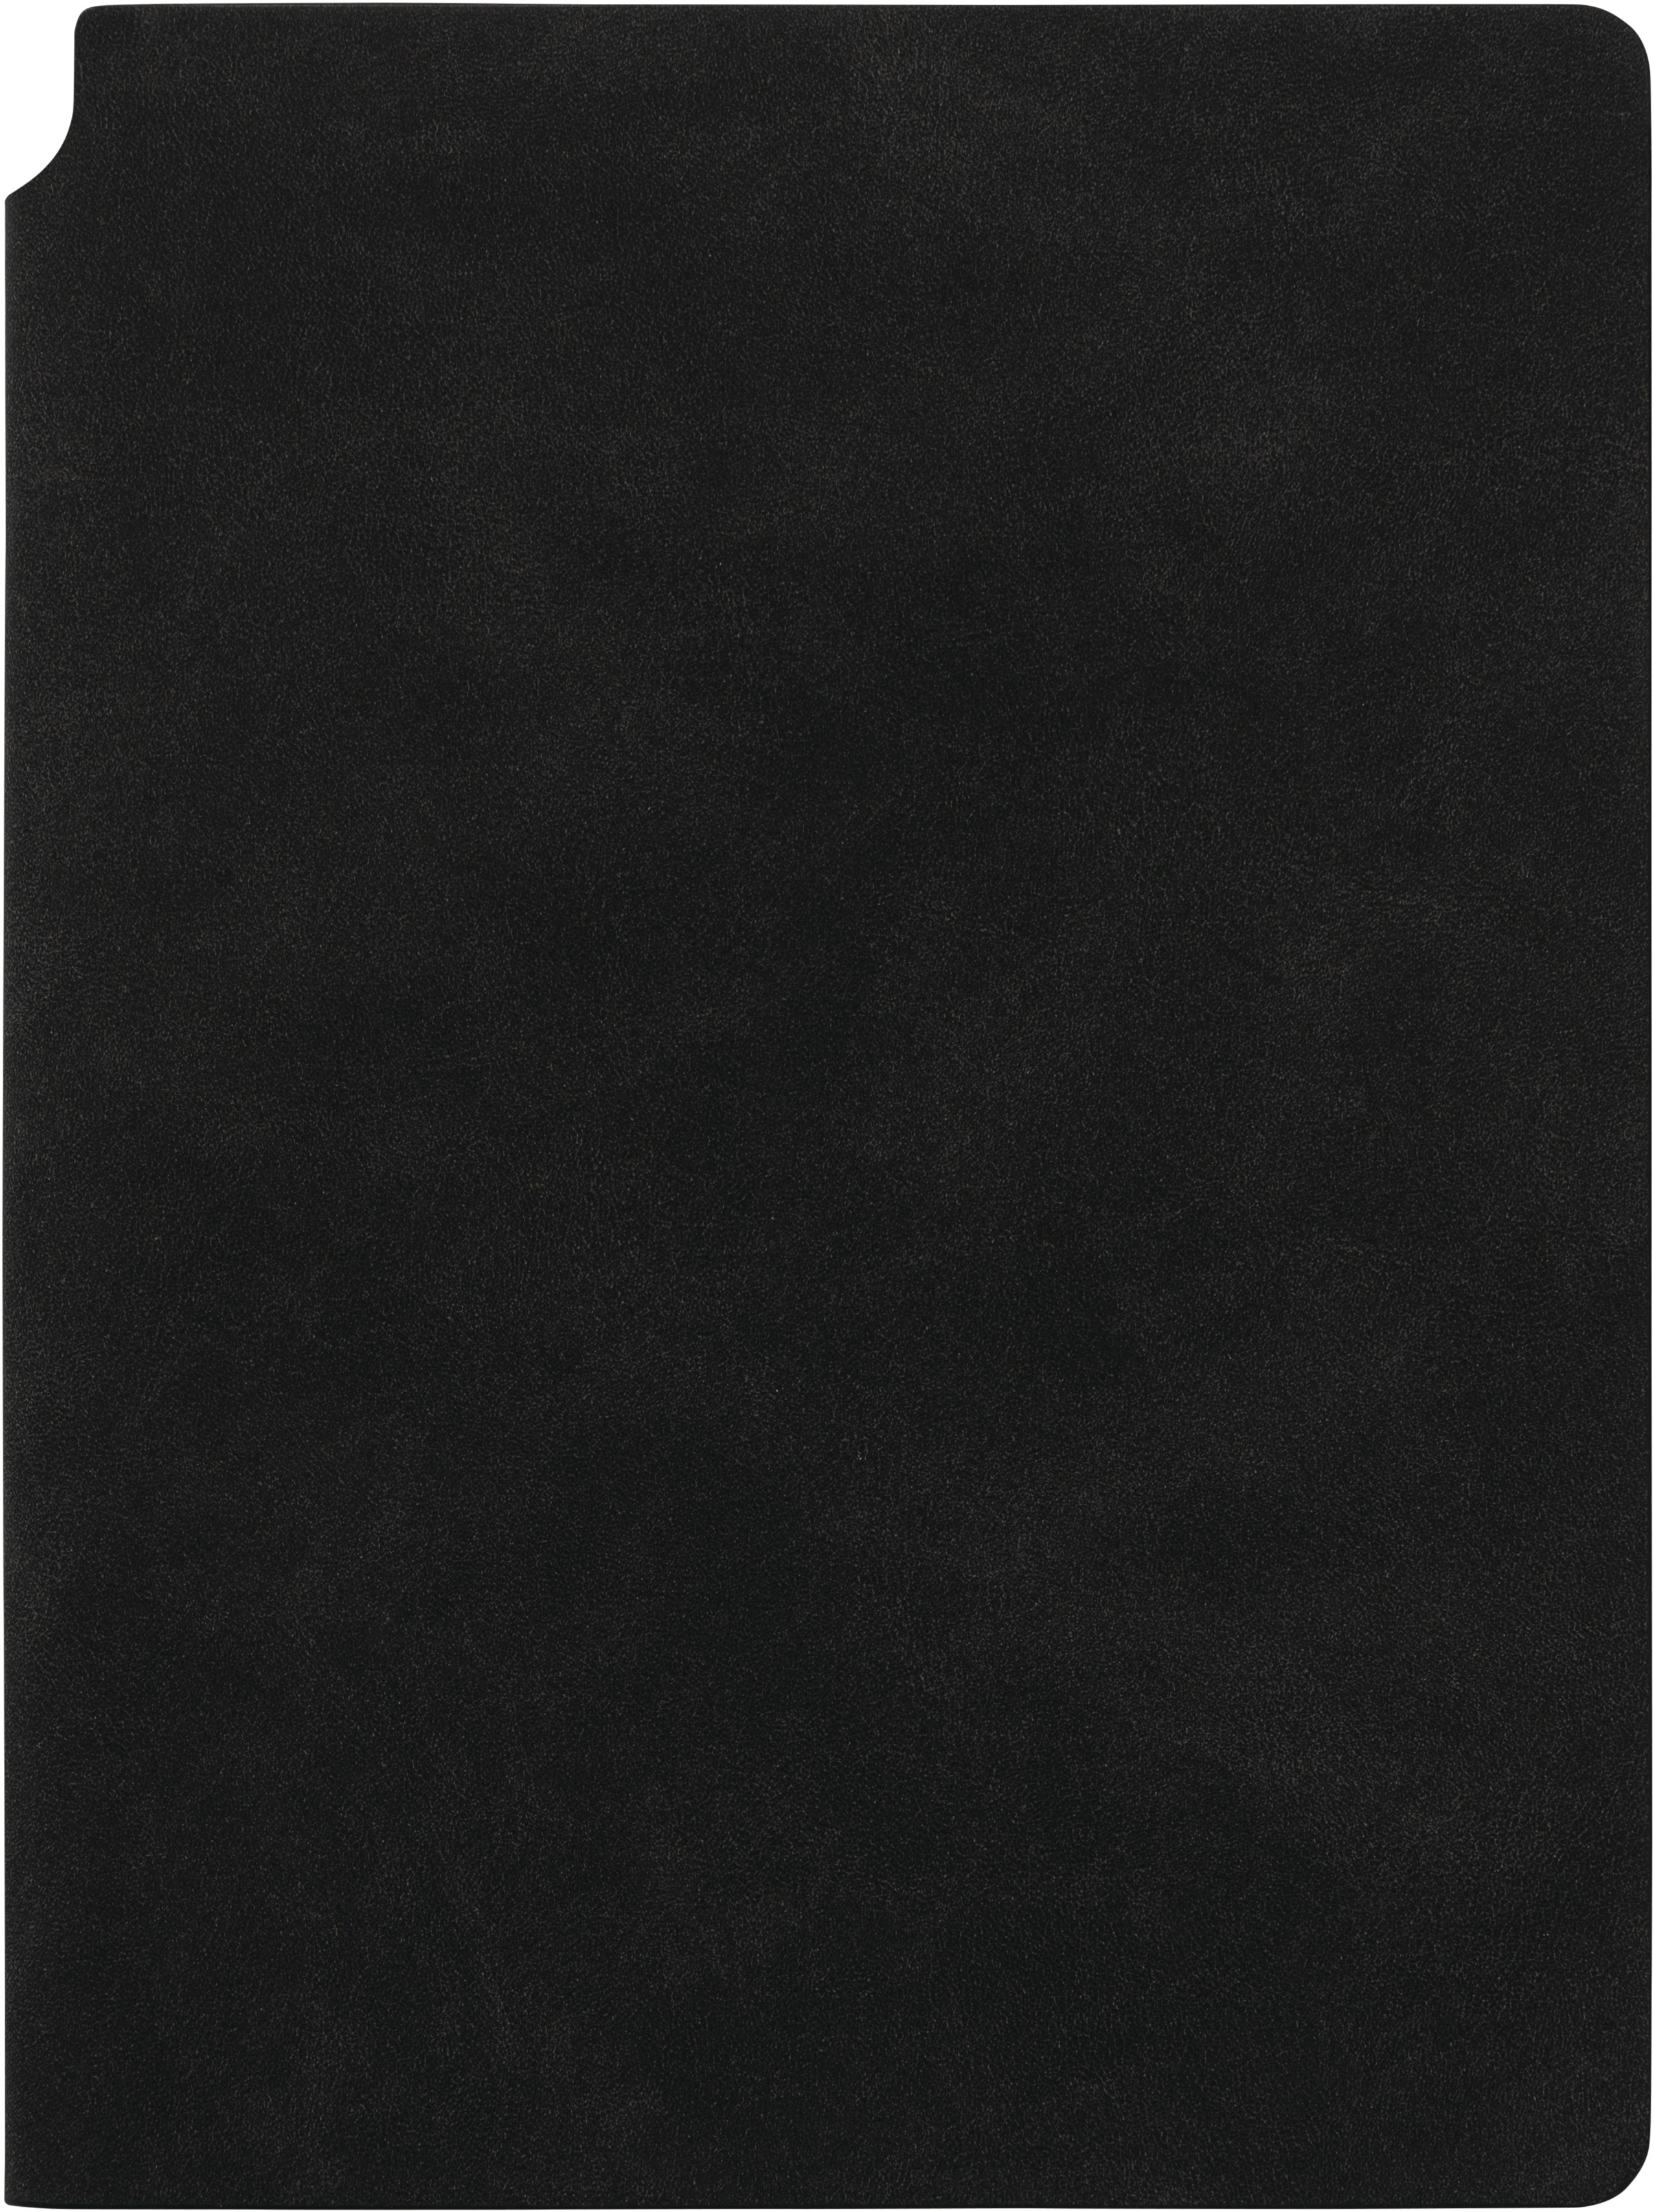 KOLMA Carnet de notes Smooth A5 06.440.06 doted, noir 144 flls.